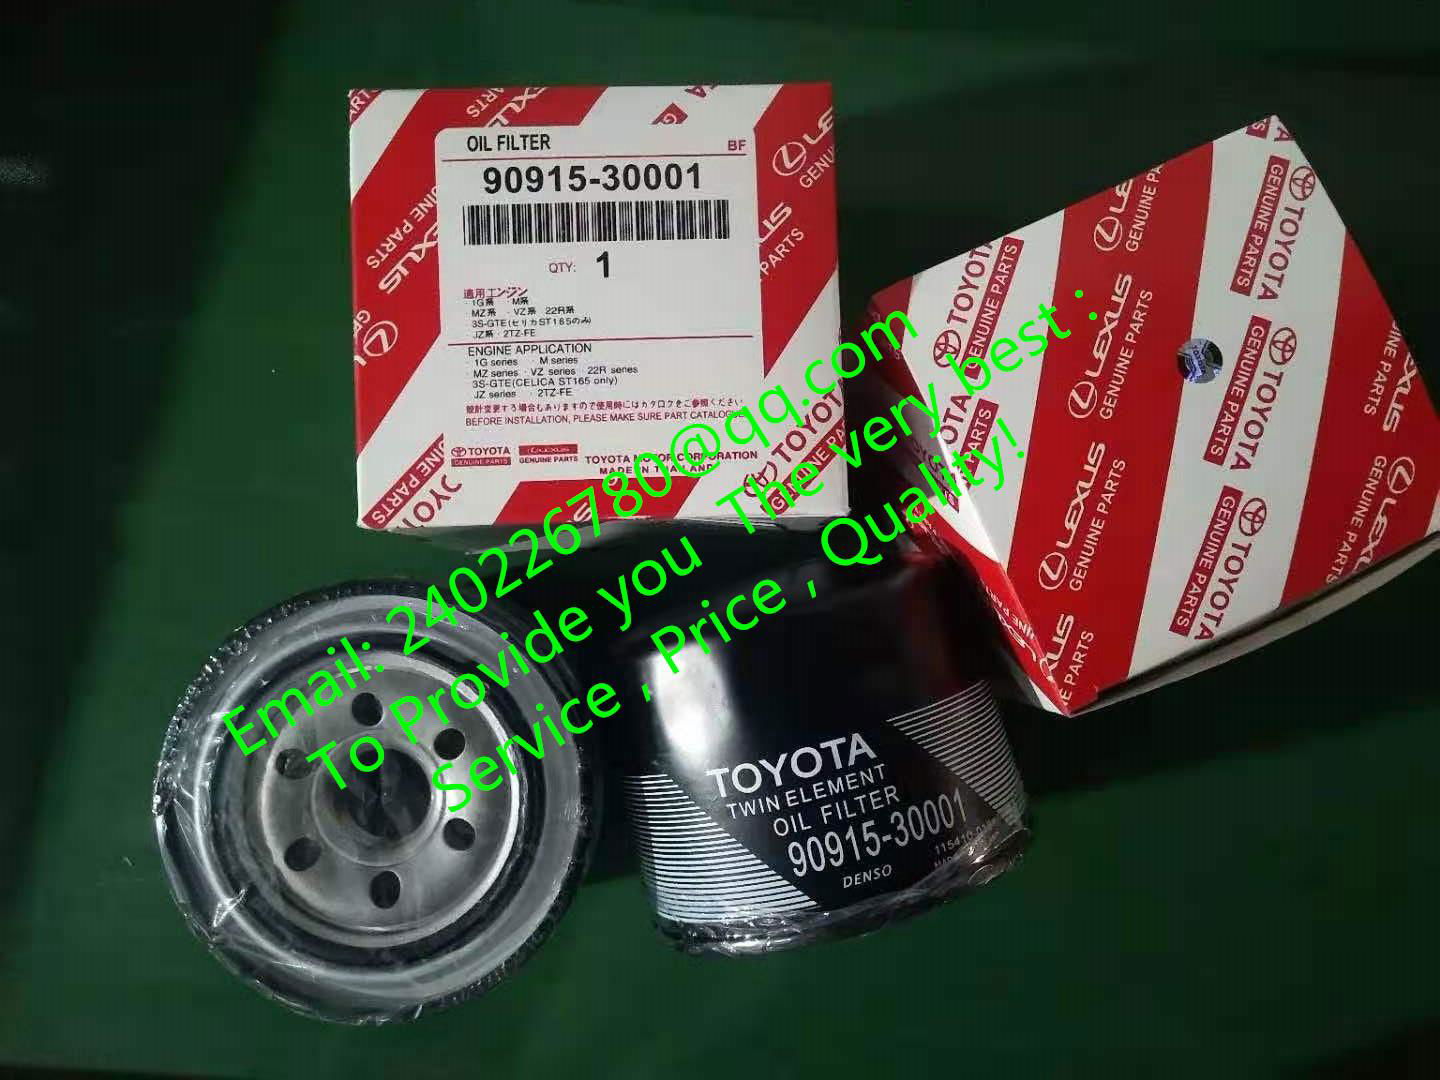 FOR TOYOTA Corolla Oil Filter 90915-30001 9091530001  90915-03003  9091503003 2